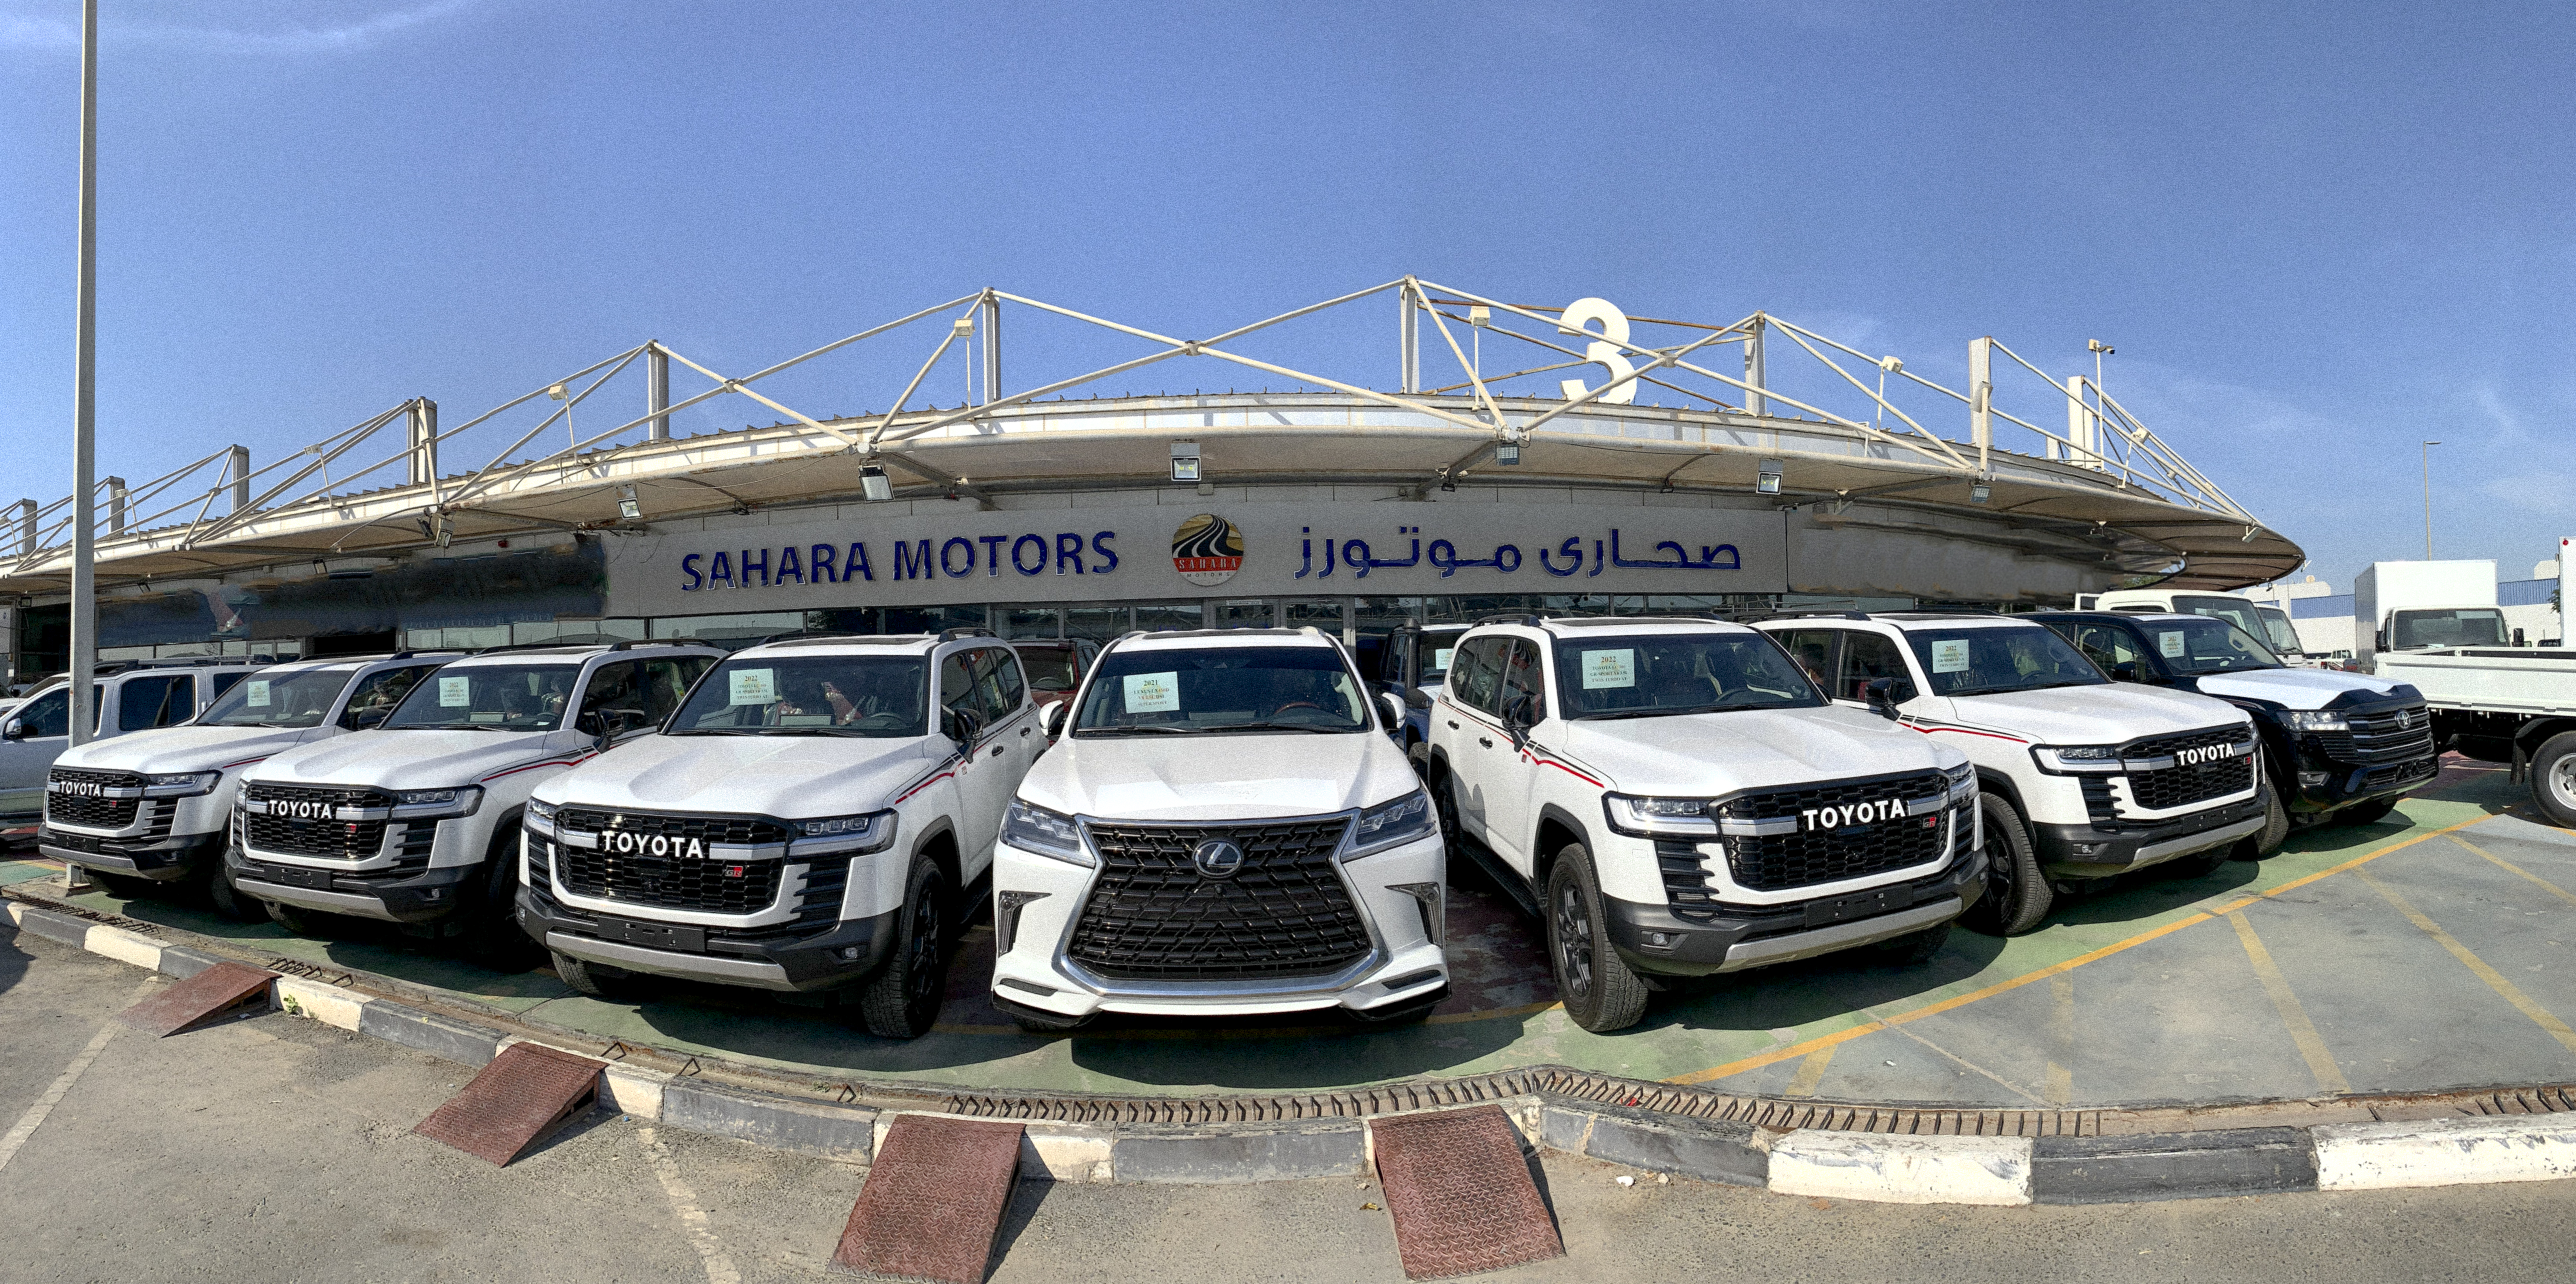 Sahara Motors Dubai - Brand new car Exporters'